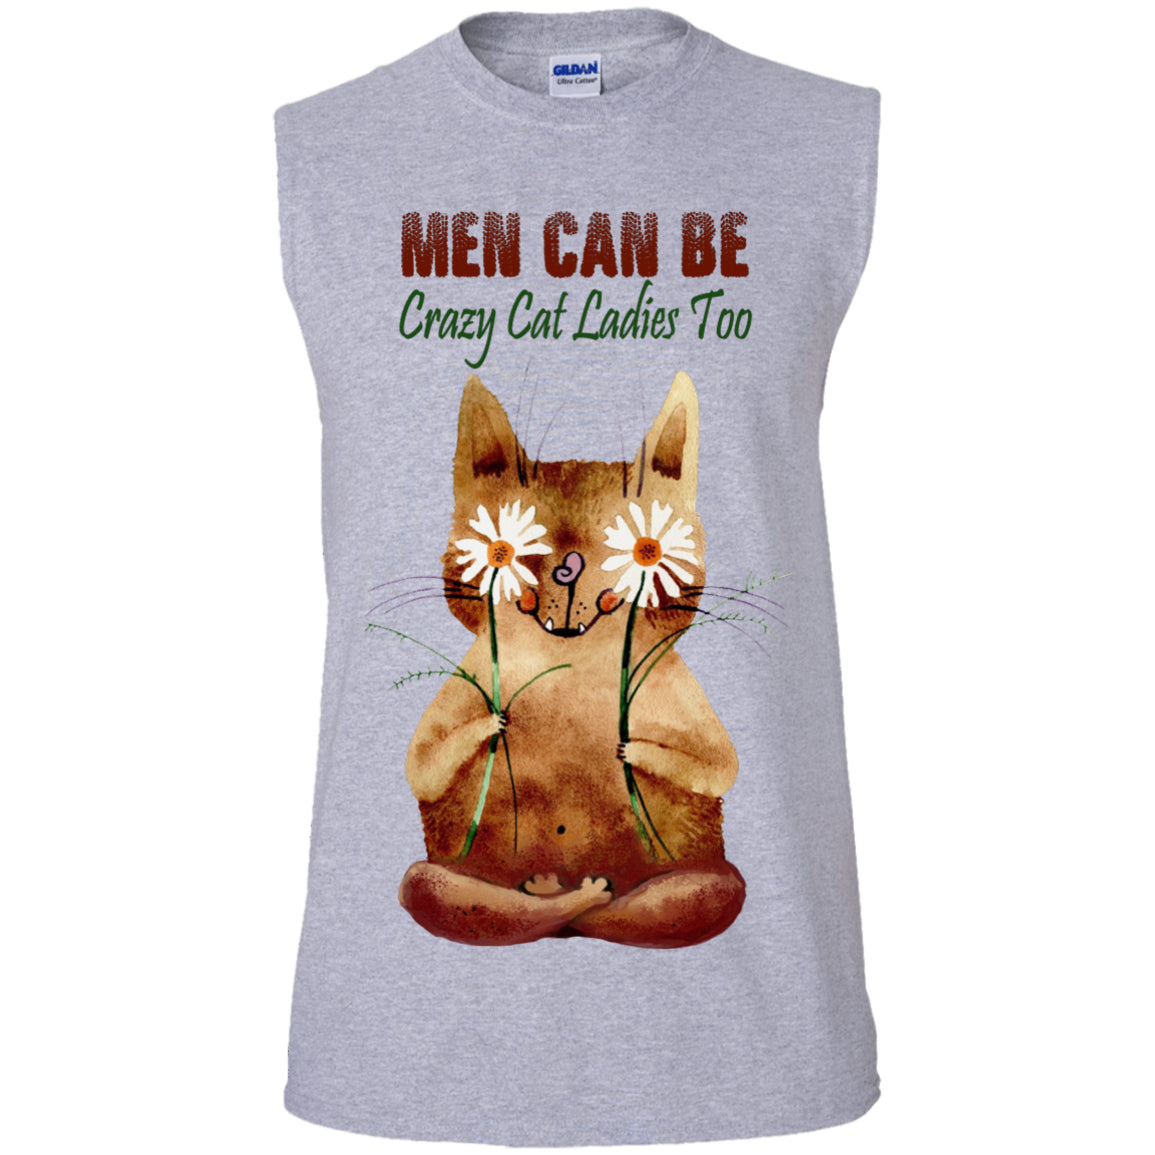 Men Can Be Crazy Cat Ladies Too - Tees & Hoodies - GoneBold.gift